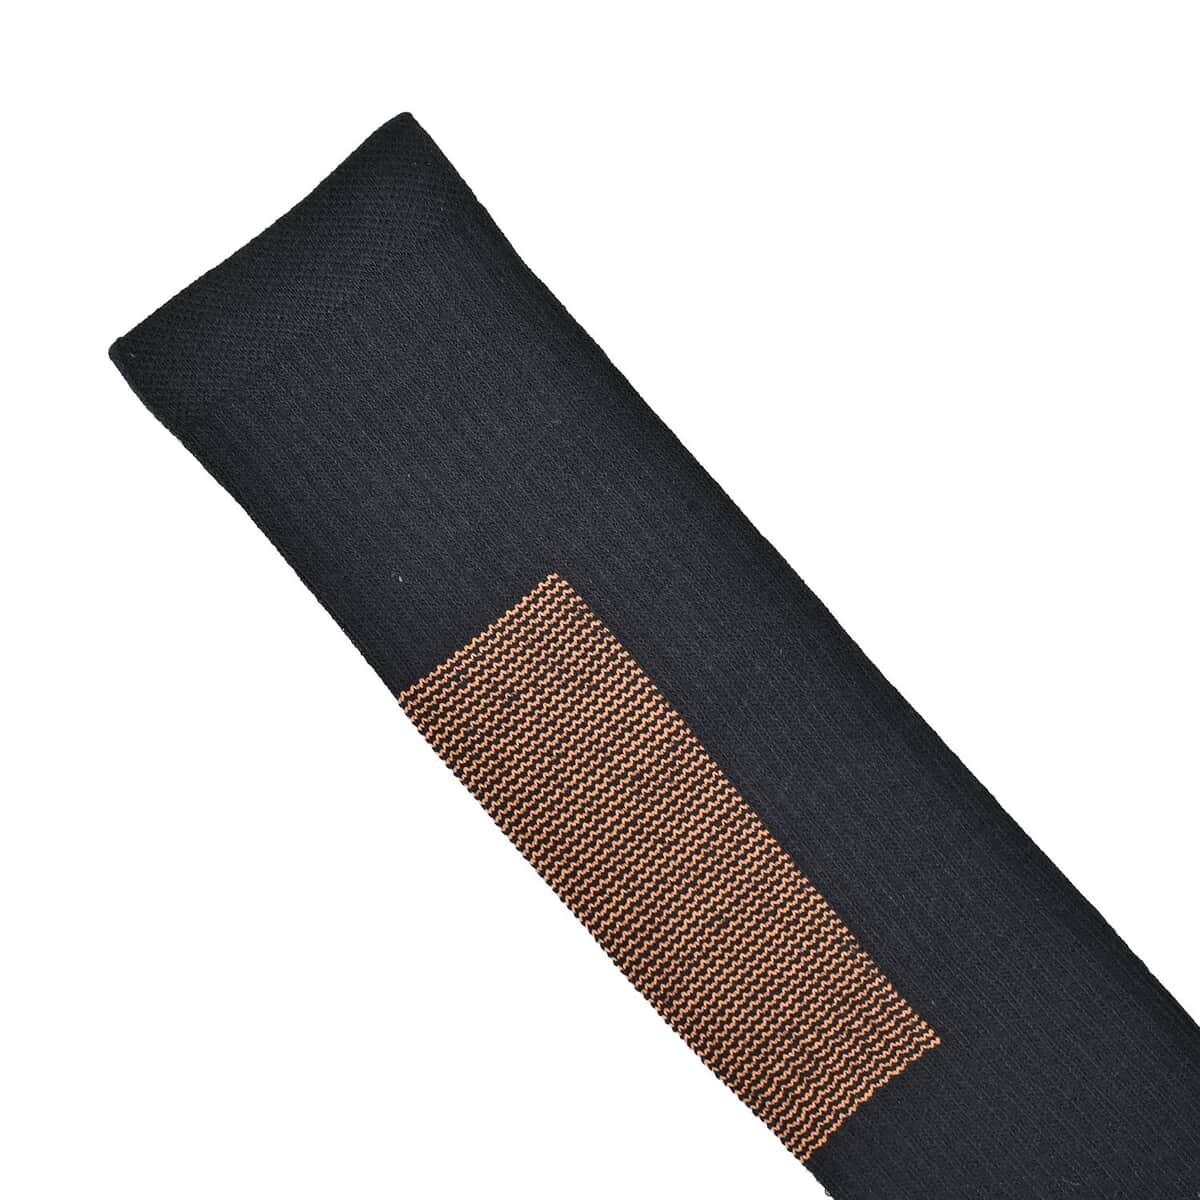 Set of 4 Pairs Knee Length Copper Infused Compression Socks - Black (S/M)  image number 3